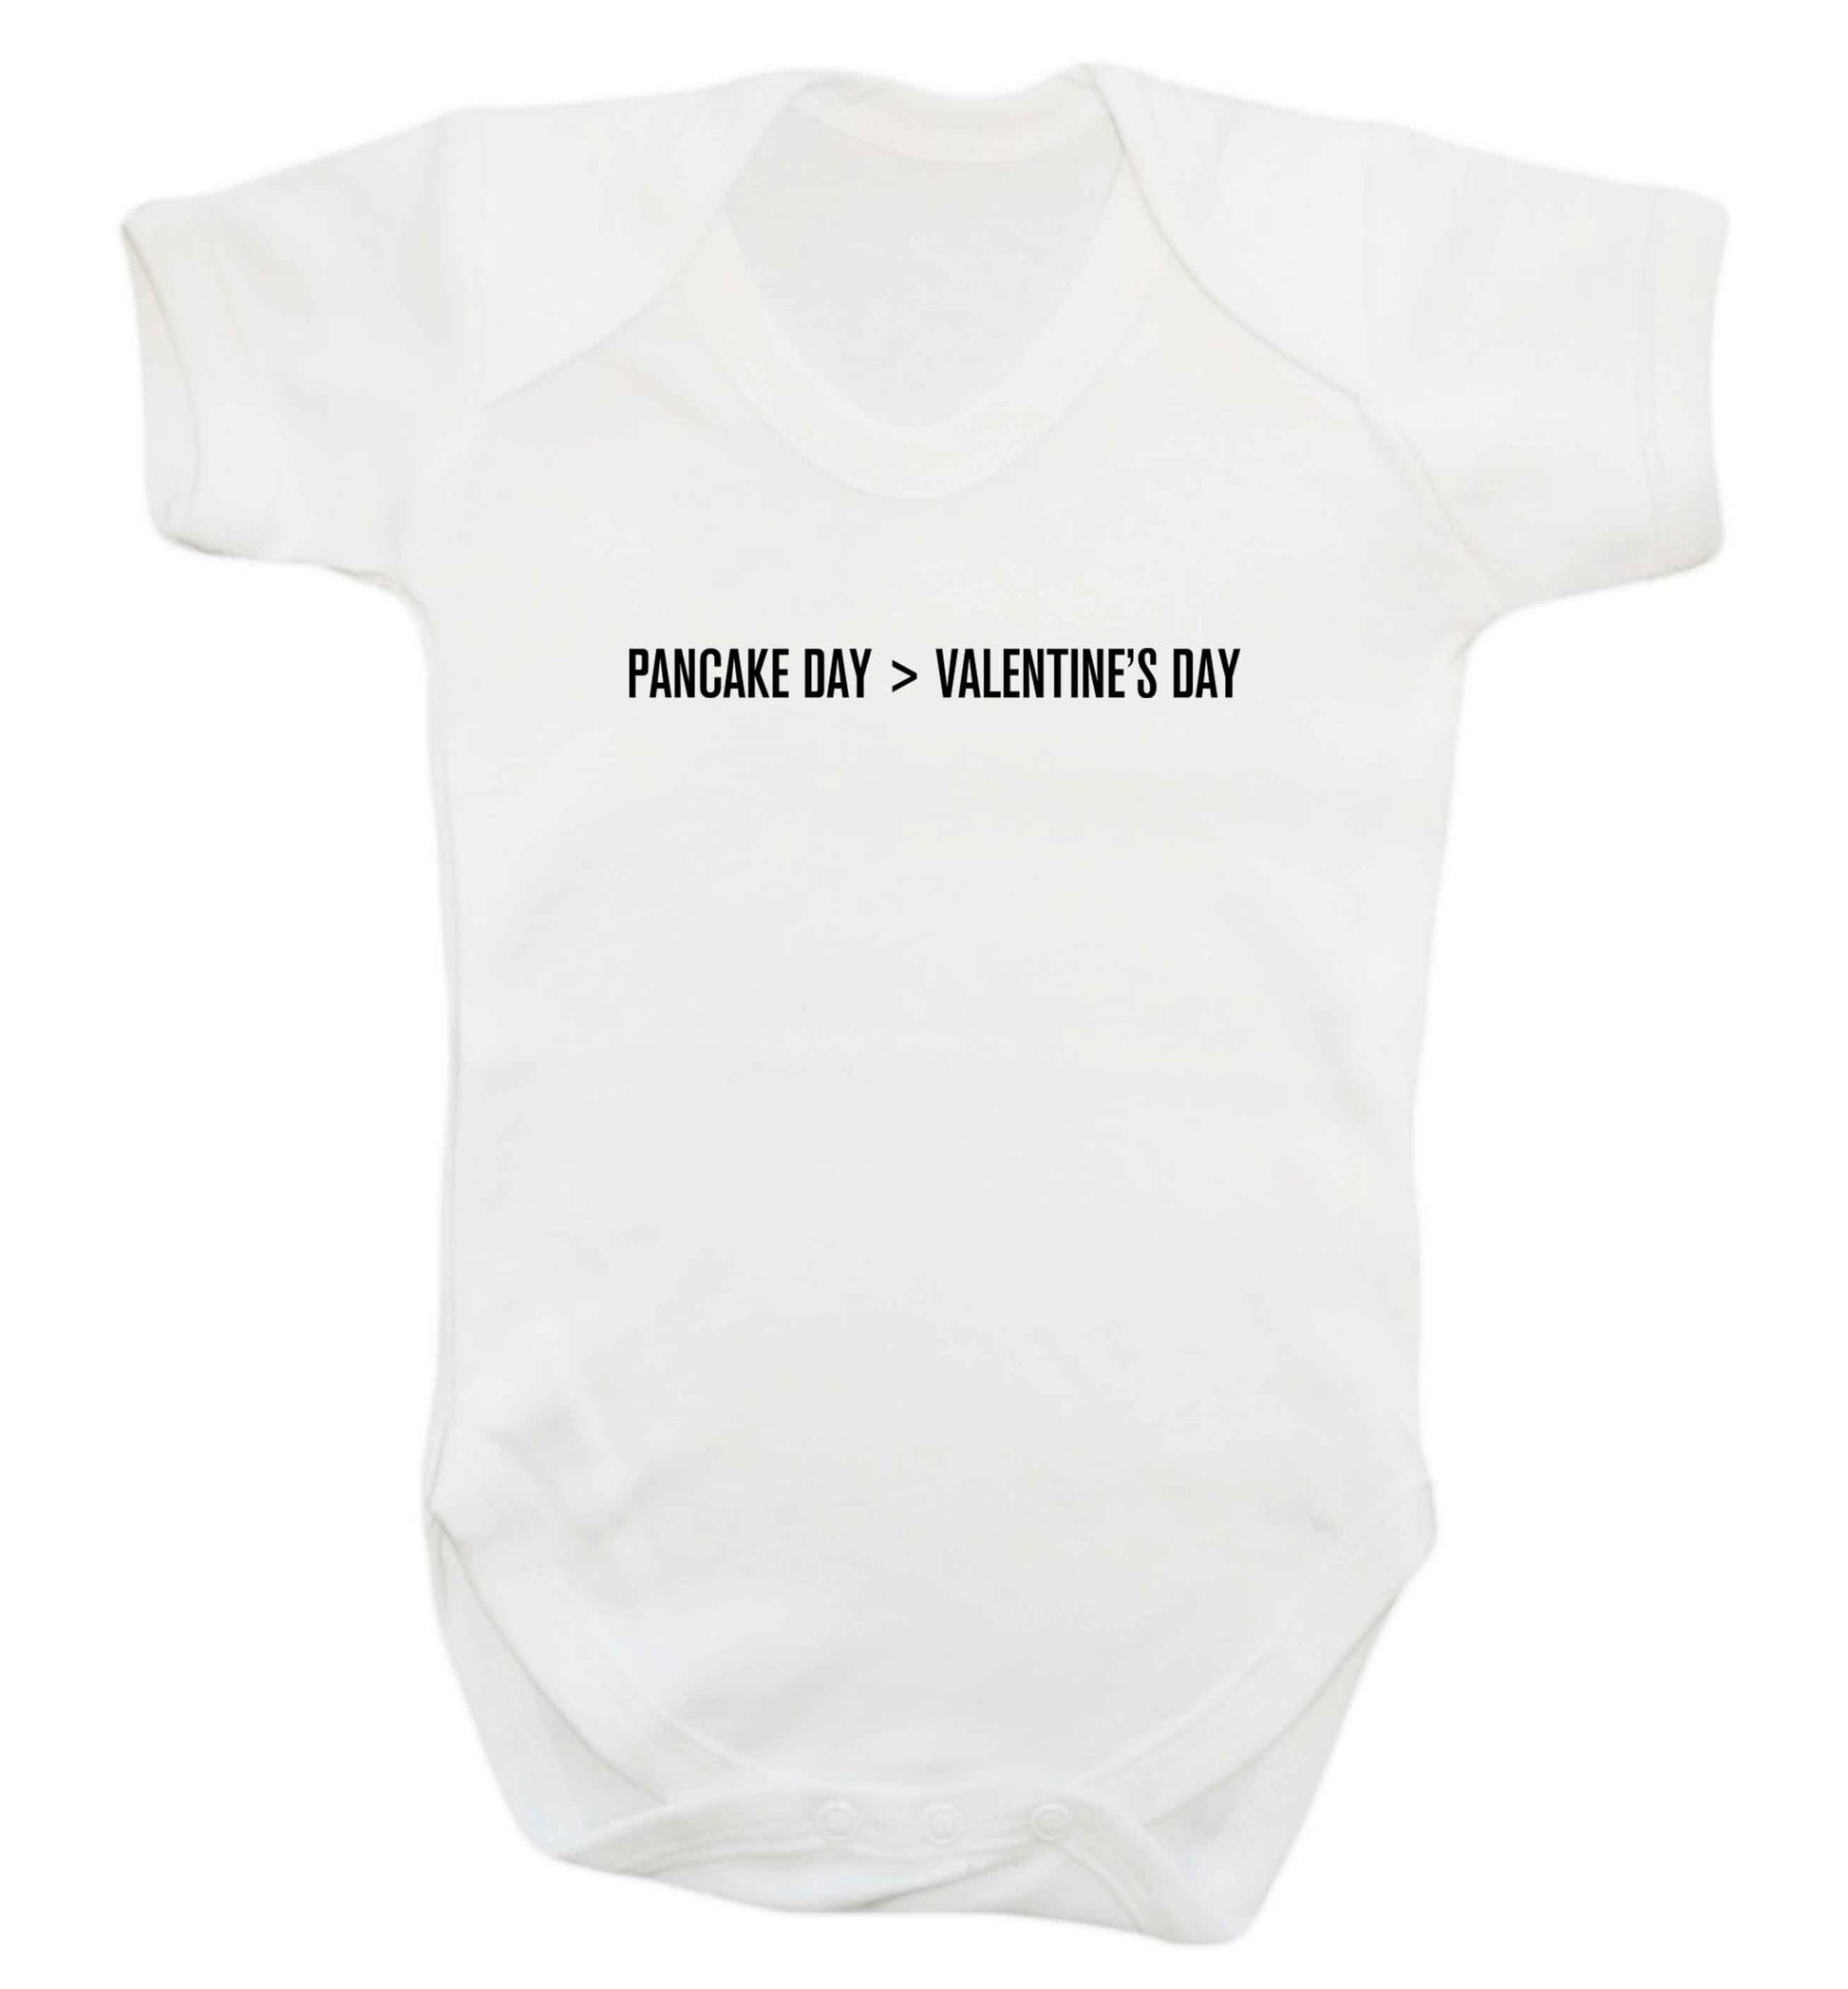 Pancake day > valentines day baby vest white 18-24 months